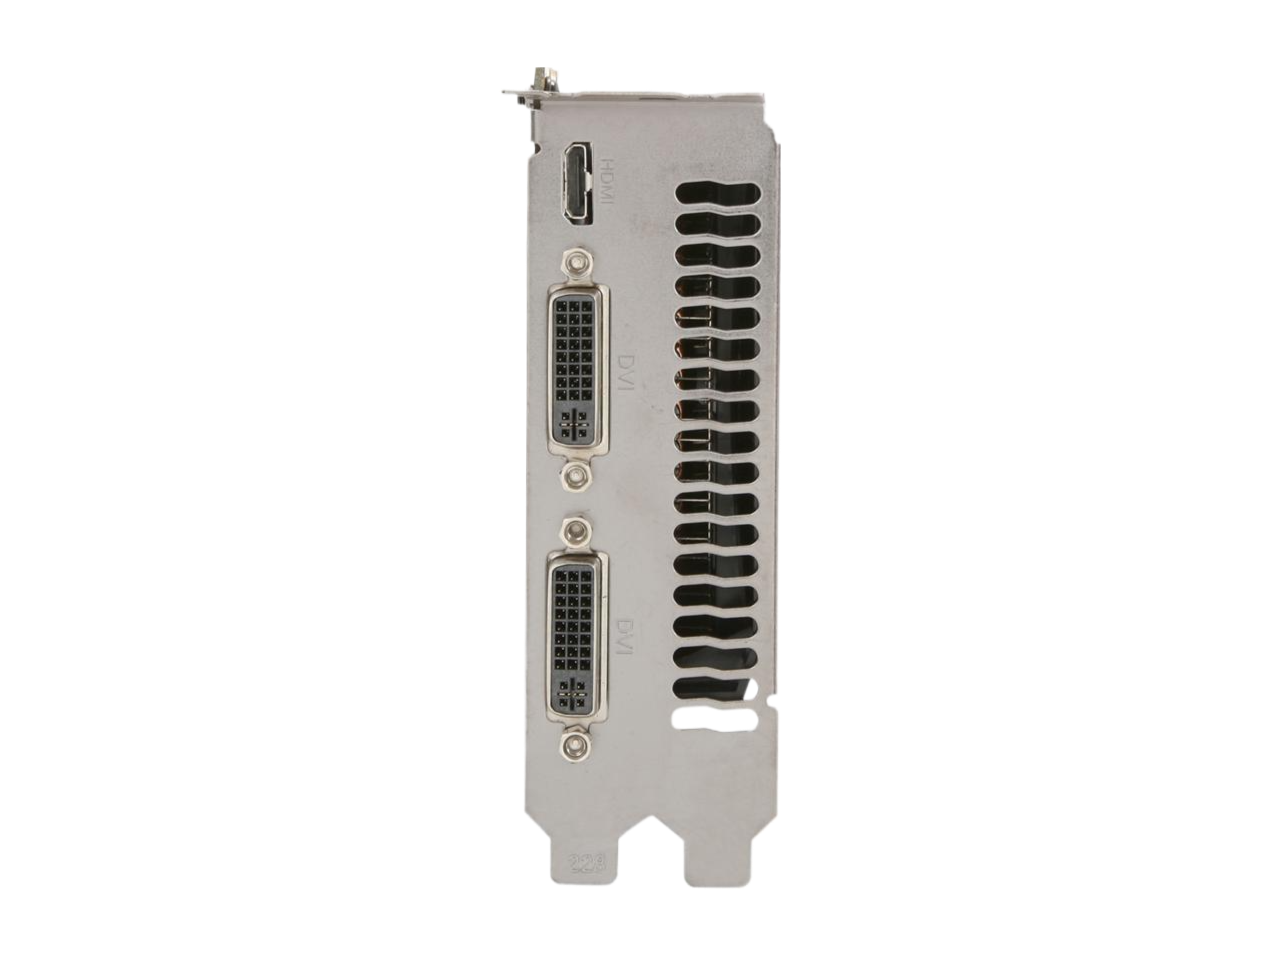 EVGA SuperClocked GeForce GTX 560 (Fermi) 1GB 256-bit GDDR5 PCI Express 2.0 x16 HDCP Ready SLI Support Video Card  01G-P3-1461-KR